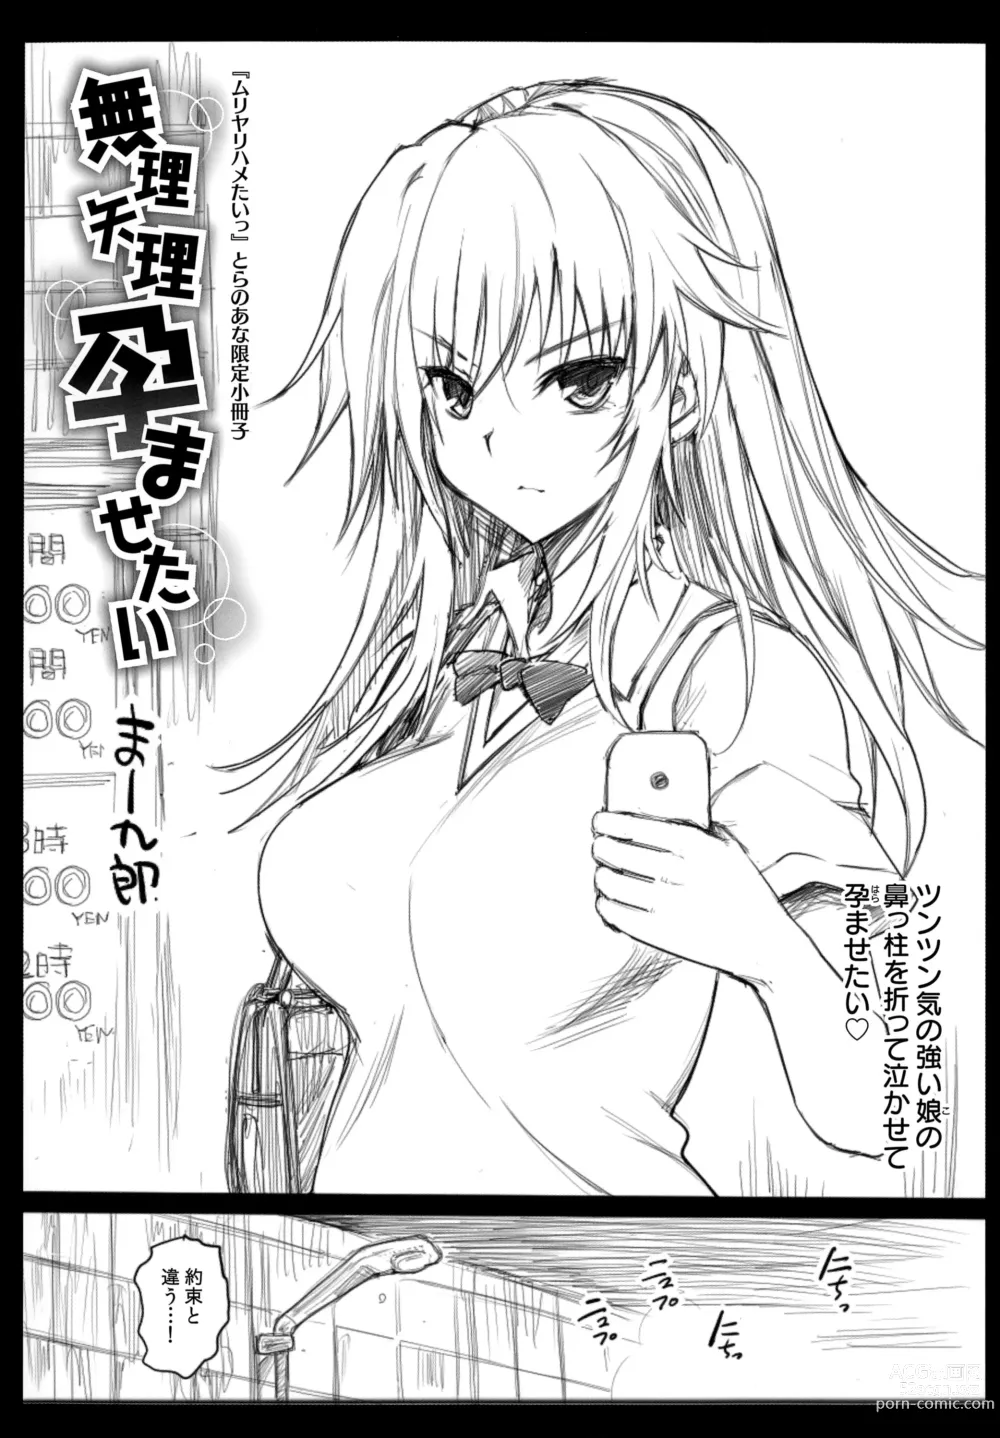 Page 1 of manga Muriyari Hametai Toranoana Gentei Shousasshi Muriyari Haramasetai